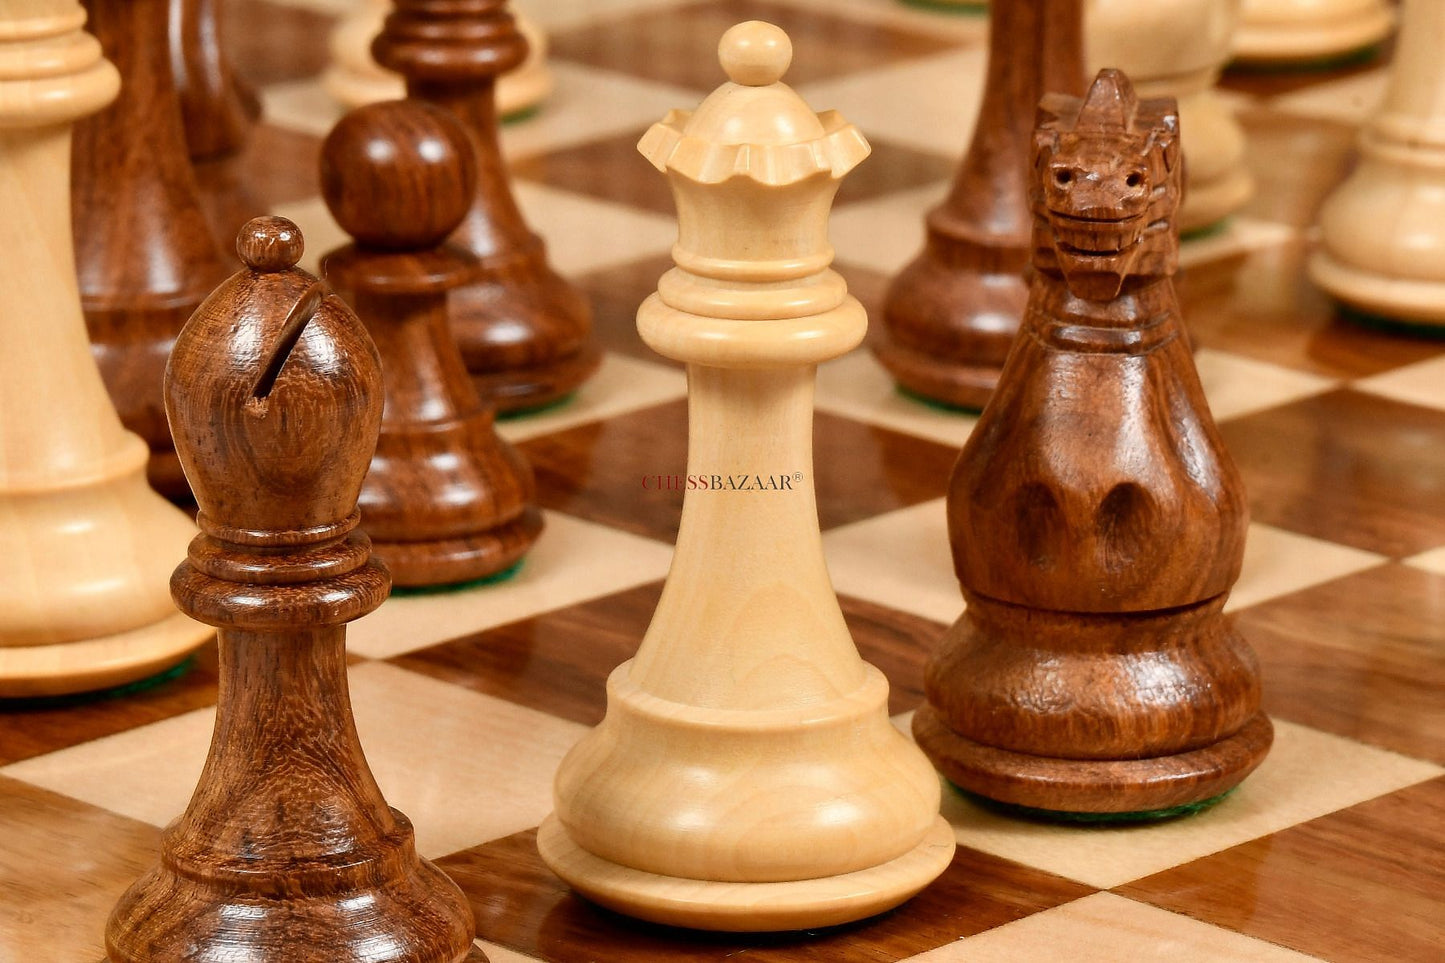 Desert Gold Staunton Series Wooden Chess Pieces in Sheesham & Box Wood - 4.0" King